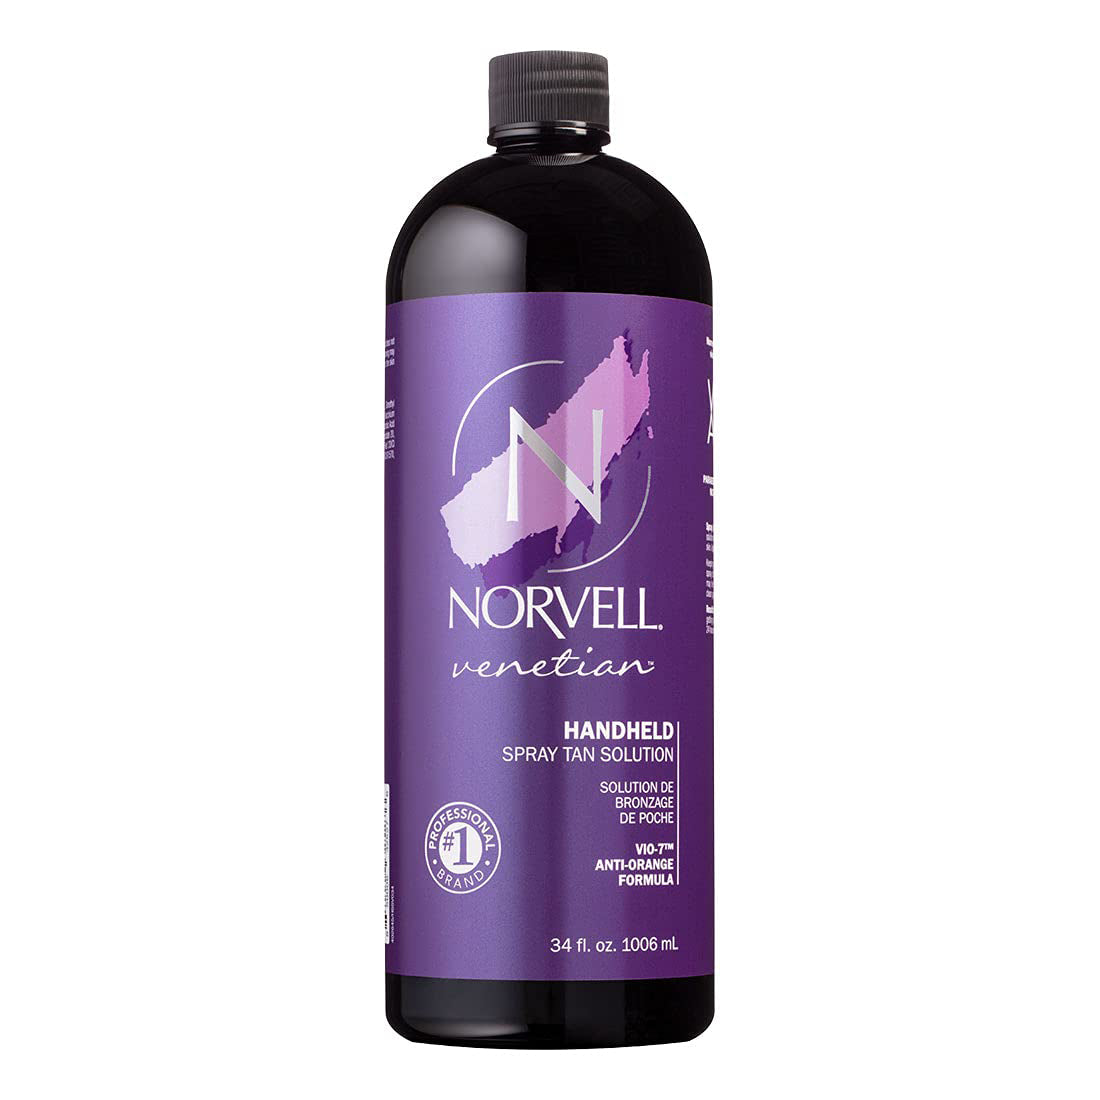 Norvell Venetian | Handheld Spray Tan Solution | Anti-Orange Formula Tanning Oil & Lotion NORVELL 34 fl.oz. / 1006mL 